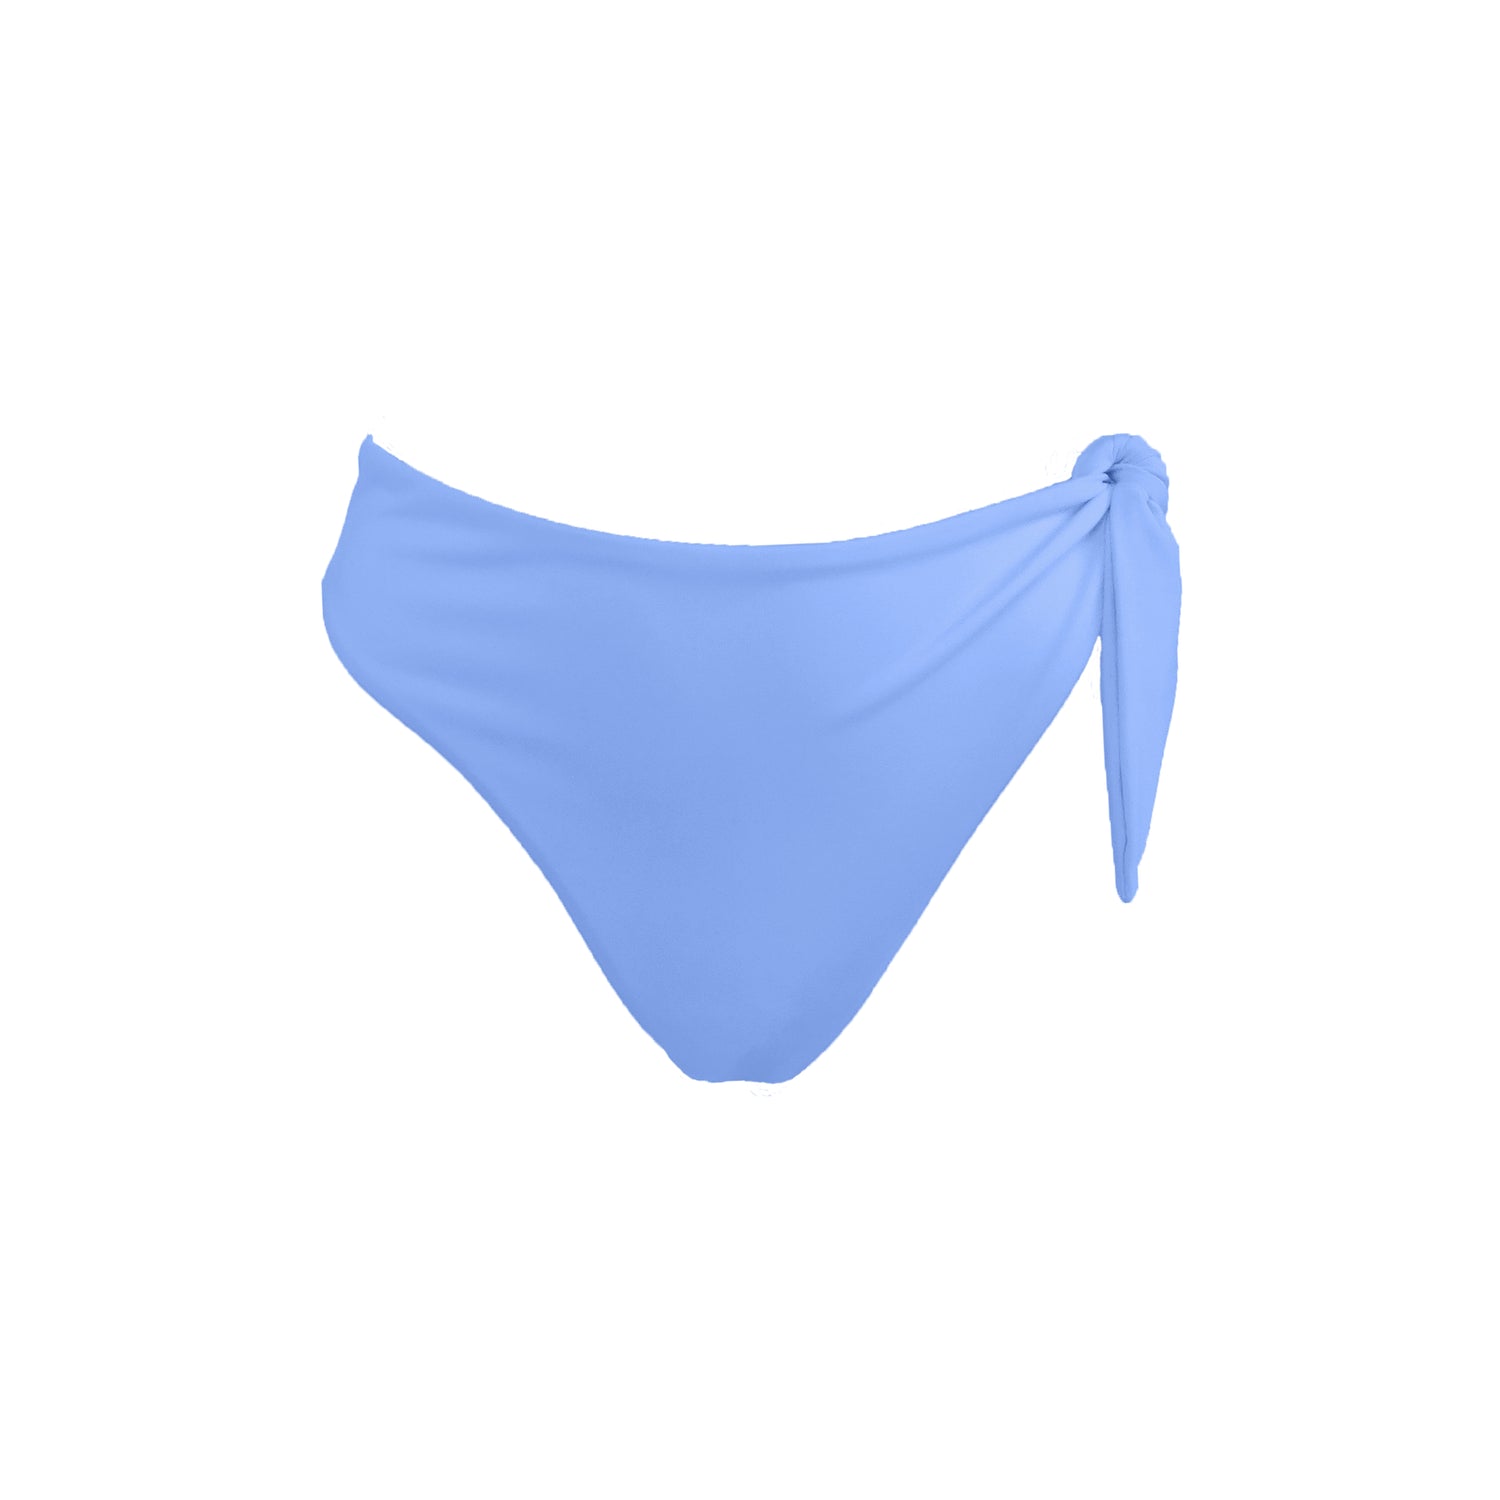 Periwinkle blue Capri bikini bottom with asymmetric adjustable side tie and cheeky bum coverage.